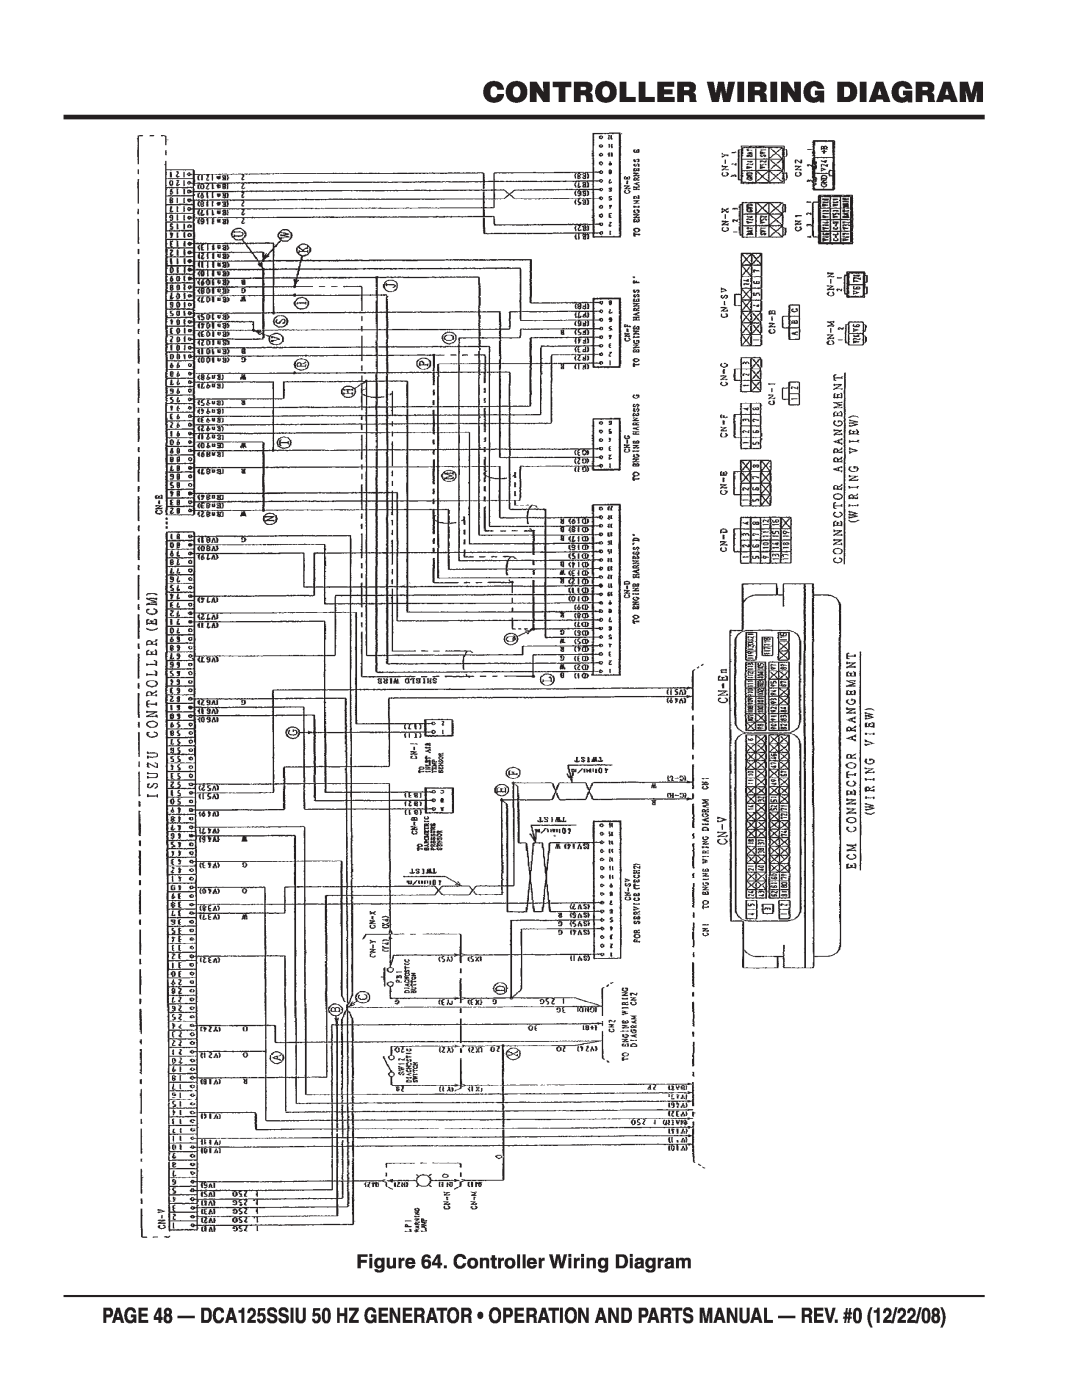 Multiquip DCA125SSIU manual Controller Wiring Diagram 